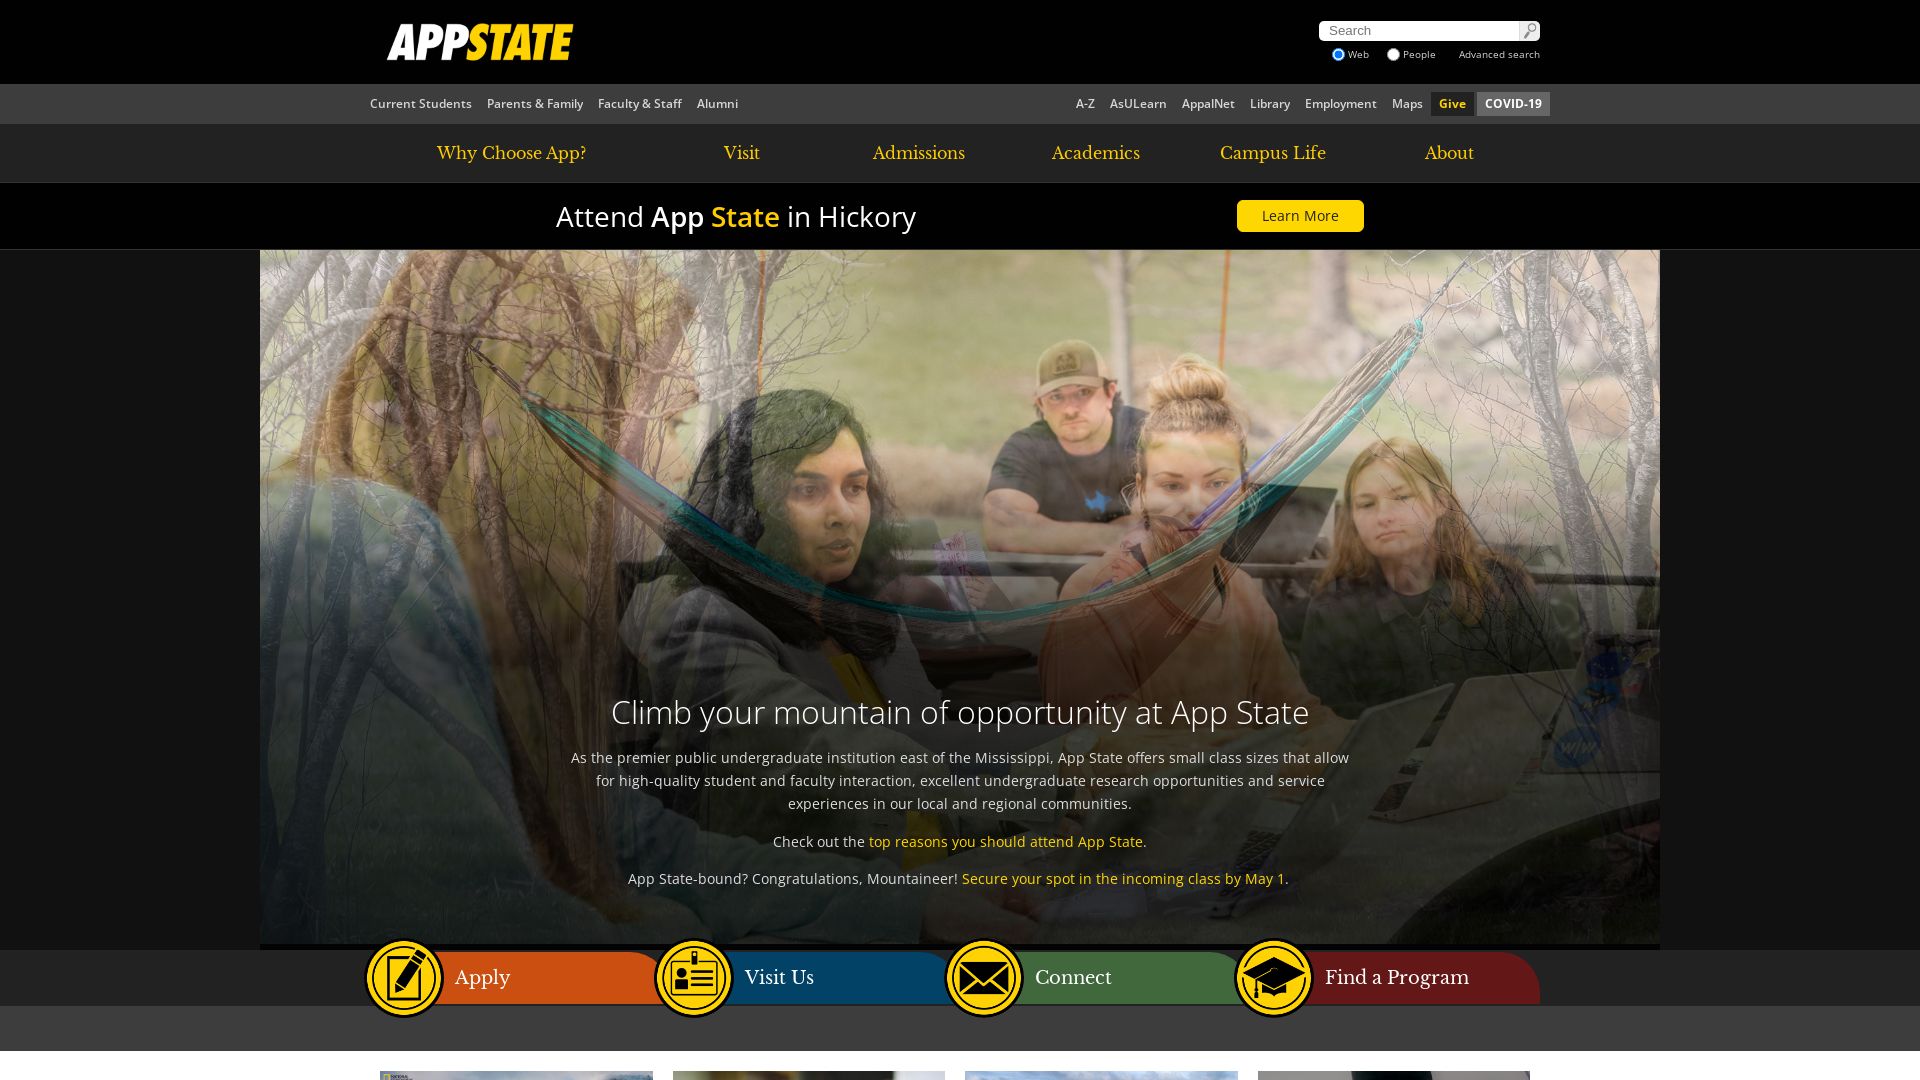 Website status appstate.edu is   ONLINE